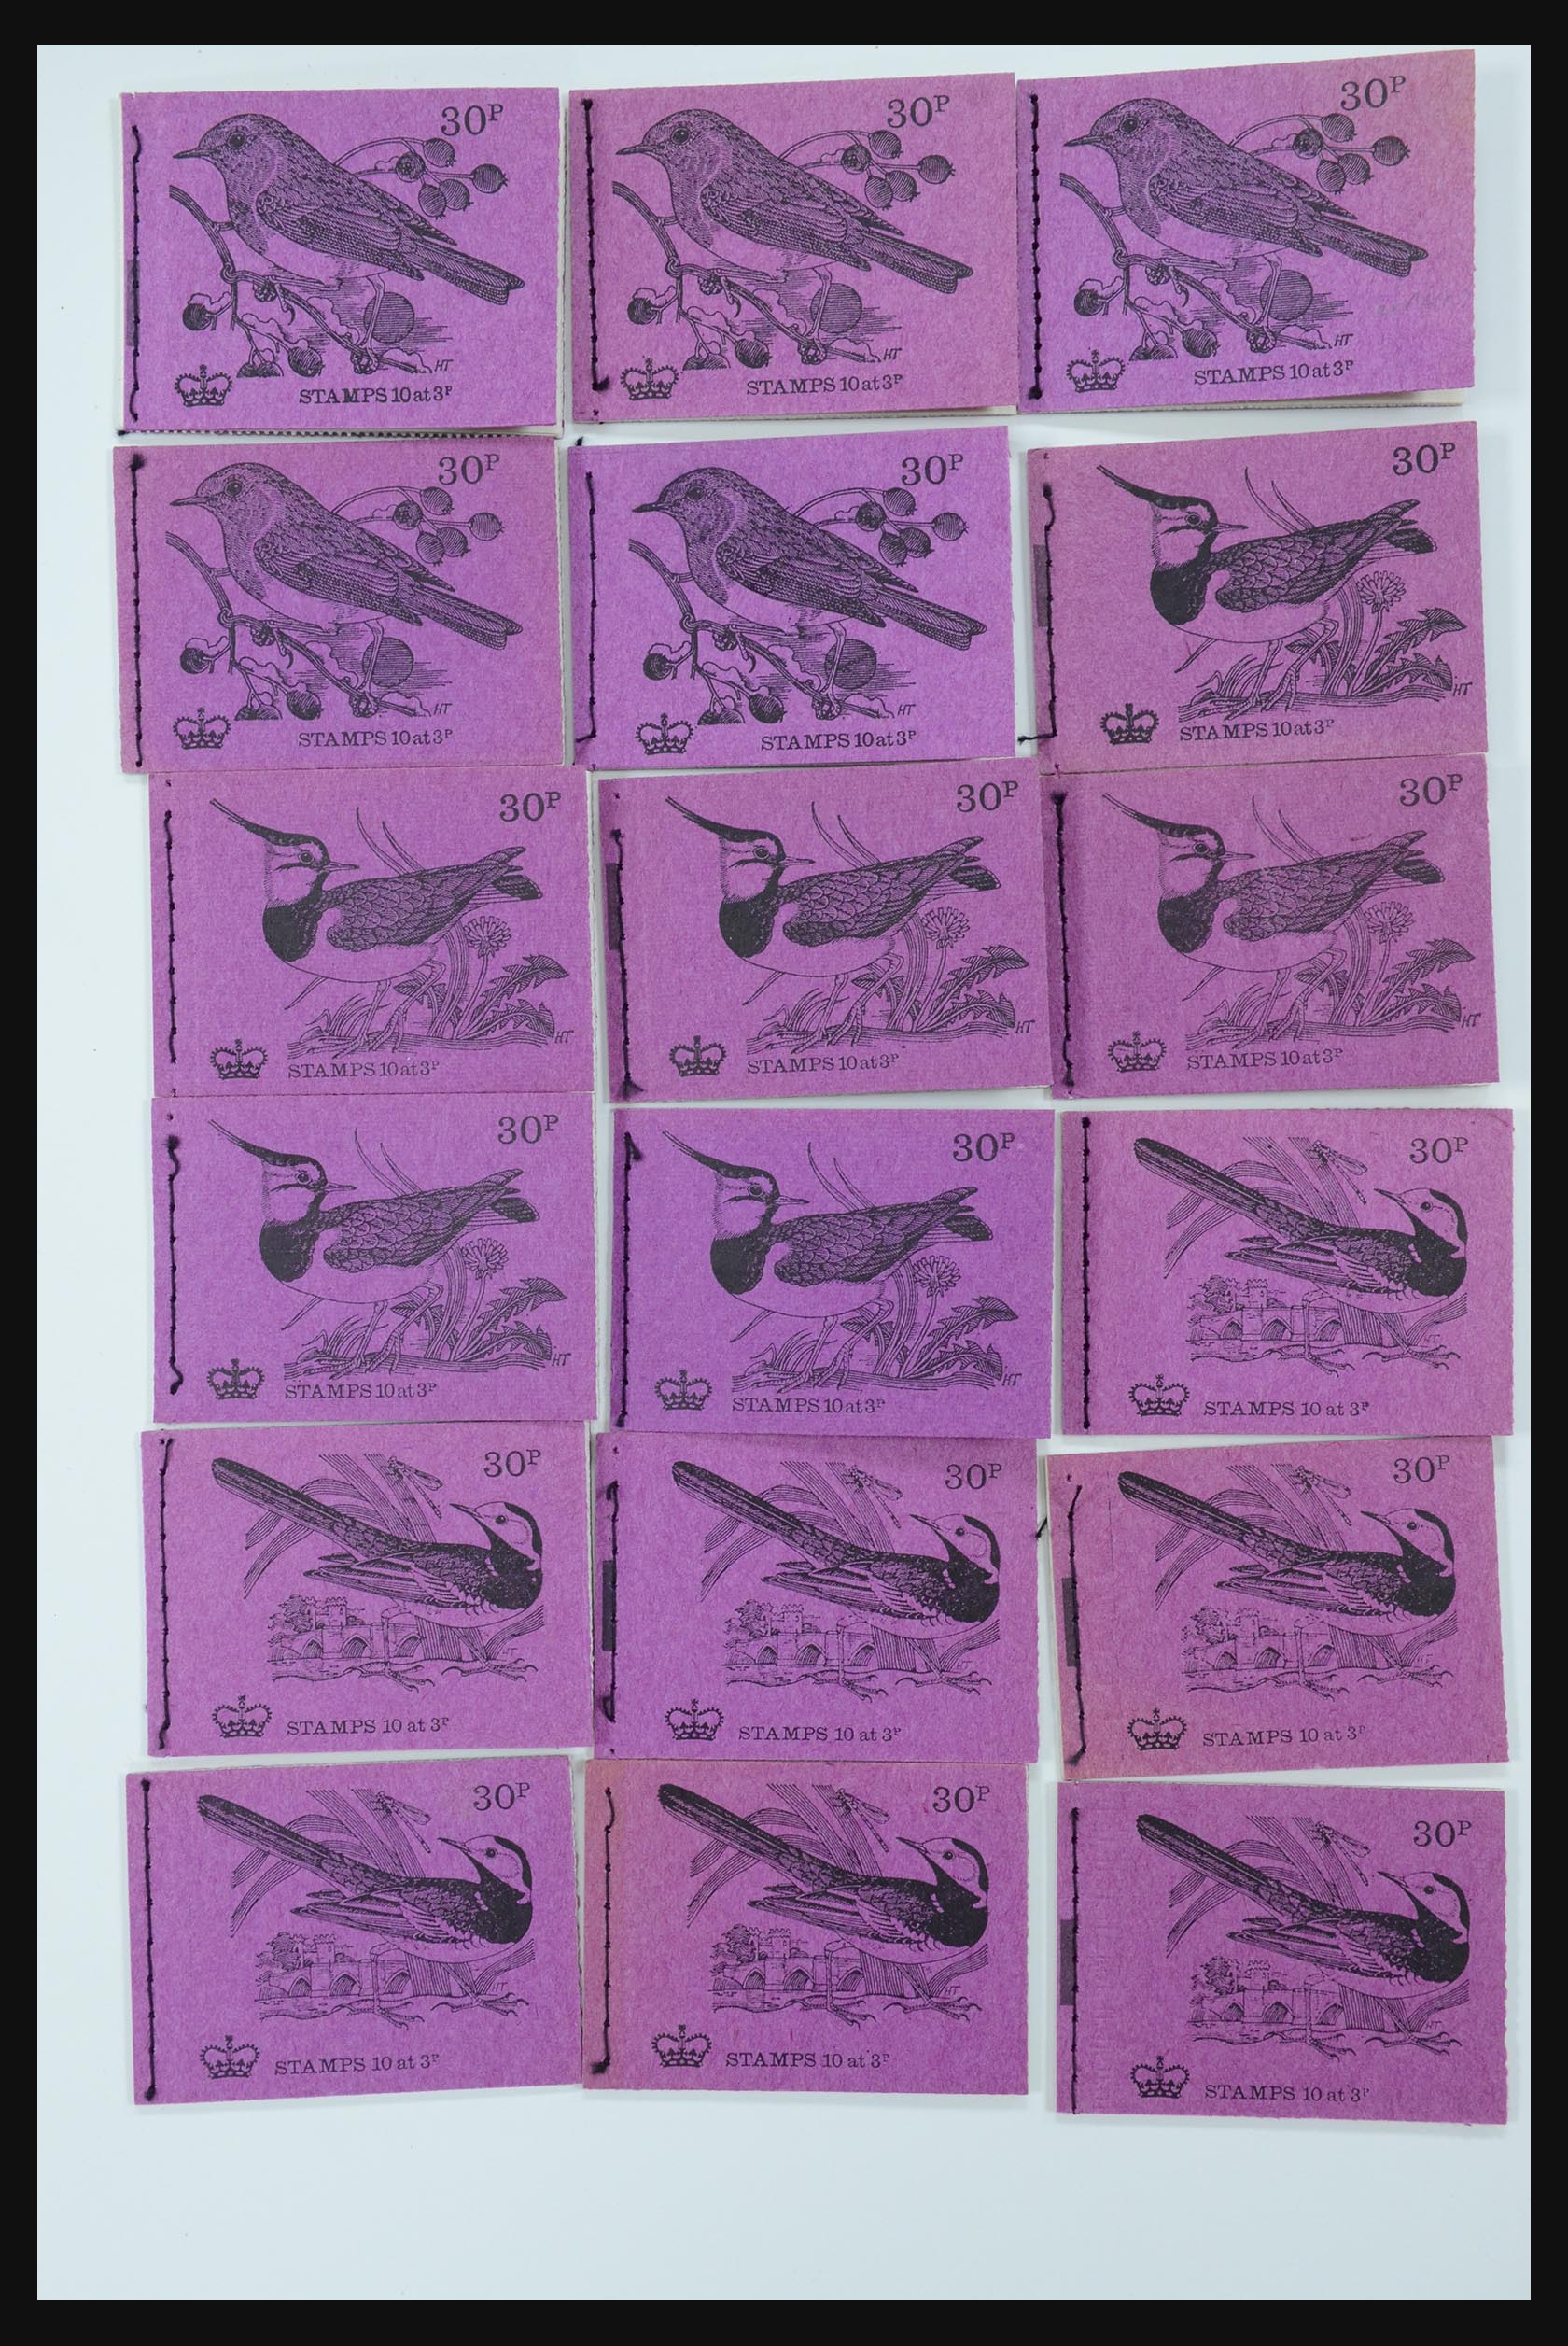 31961 014 - 31961 Great Britain stampbooklets 1971-1999.